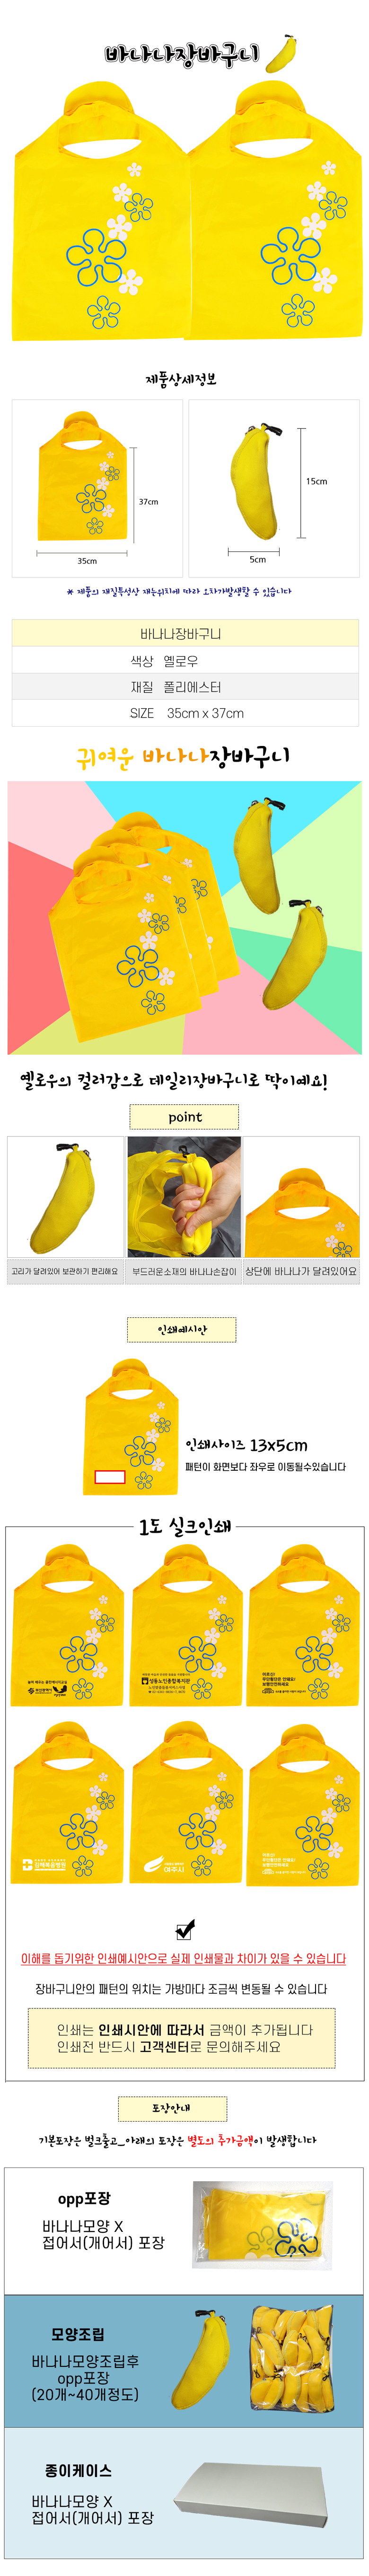 shopping_bag_banana_detail_780.jpg